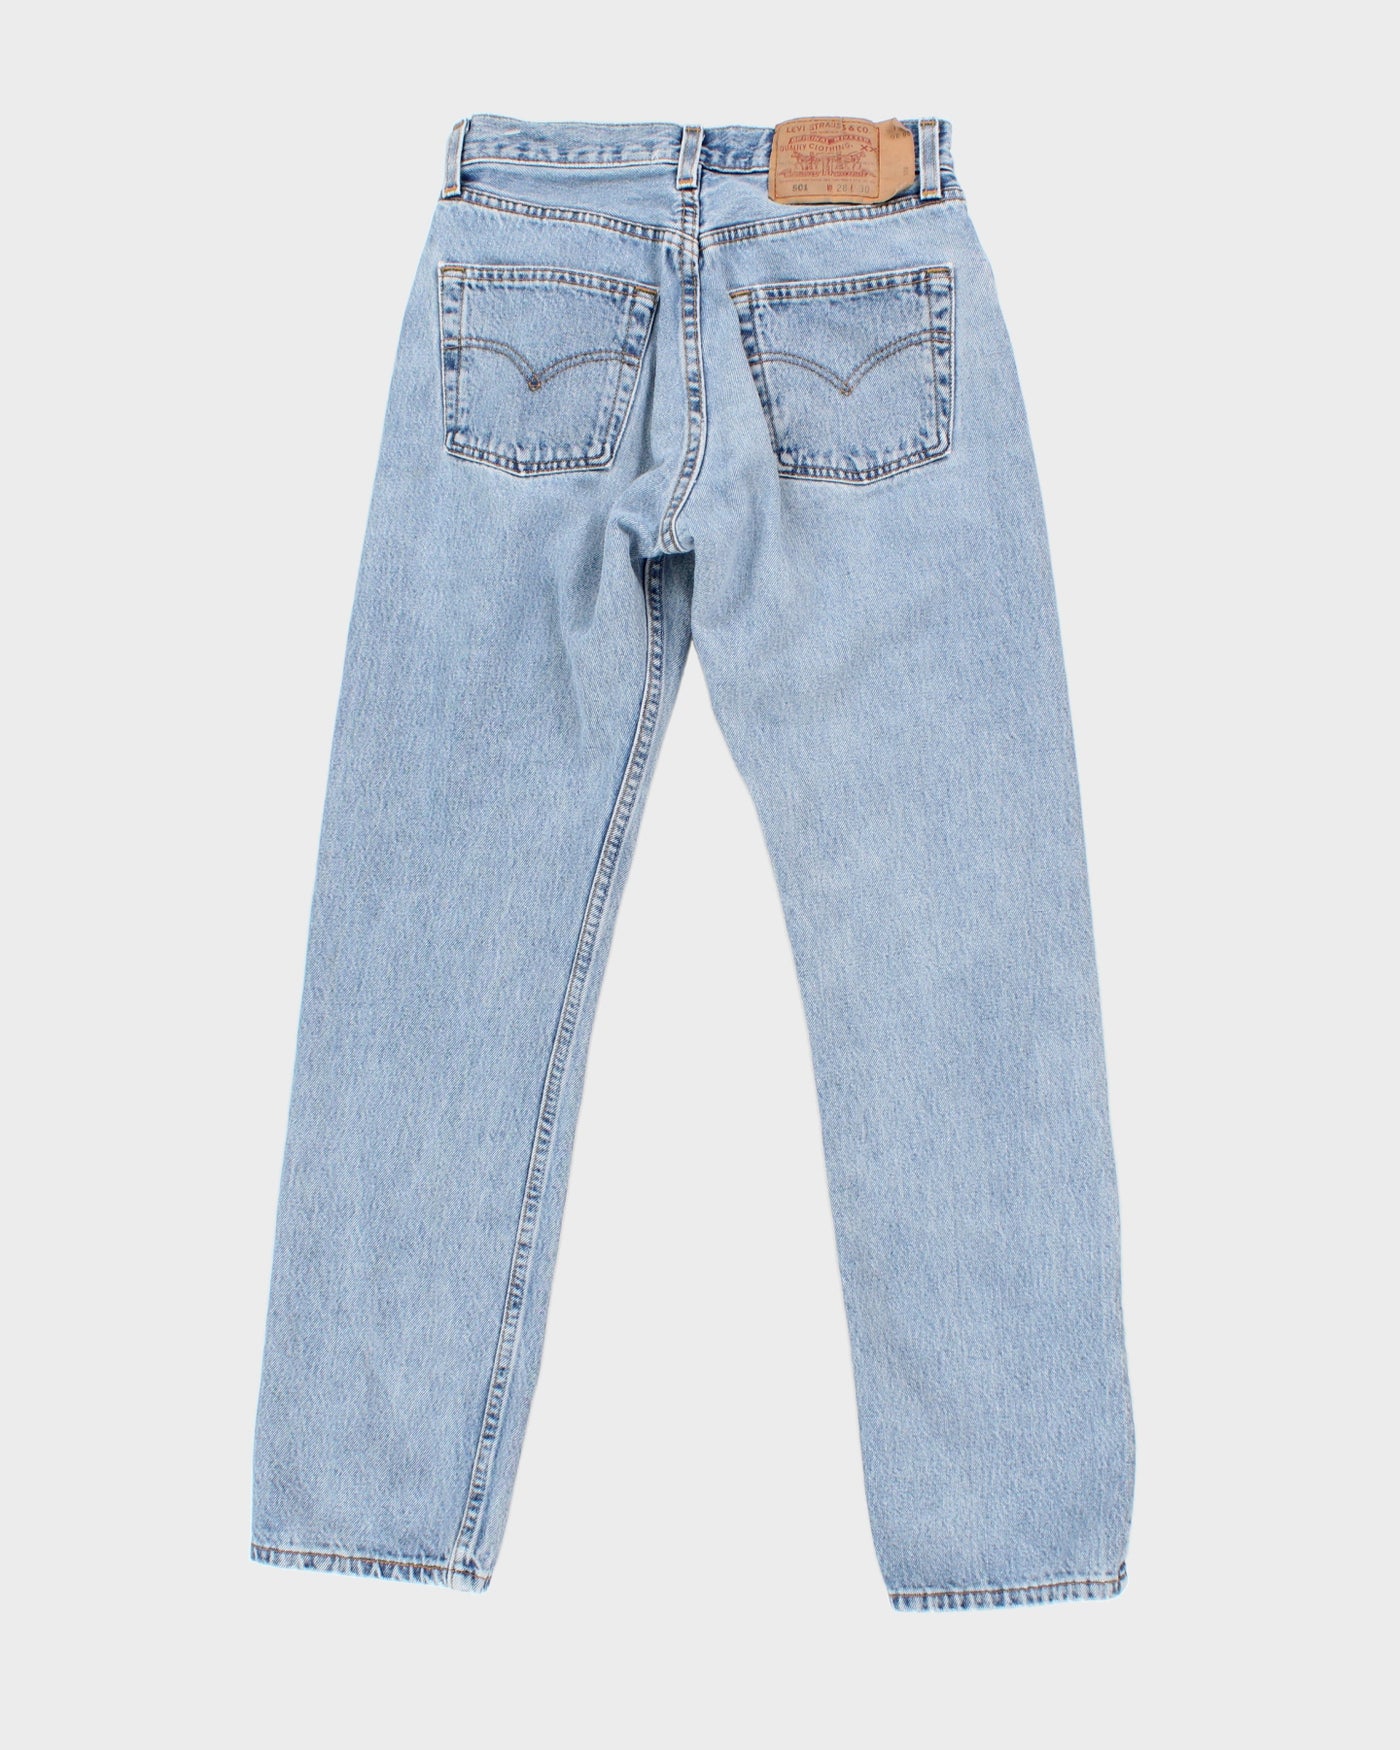 Vintage 90s Levi's Medium Wash Denim 501 Jeans - W26 L28